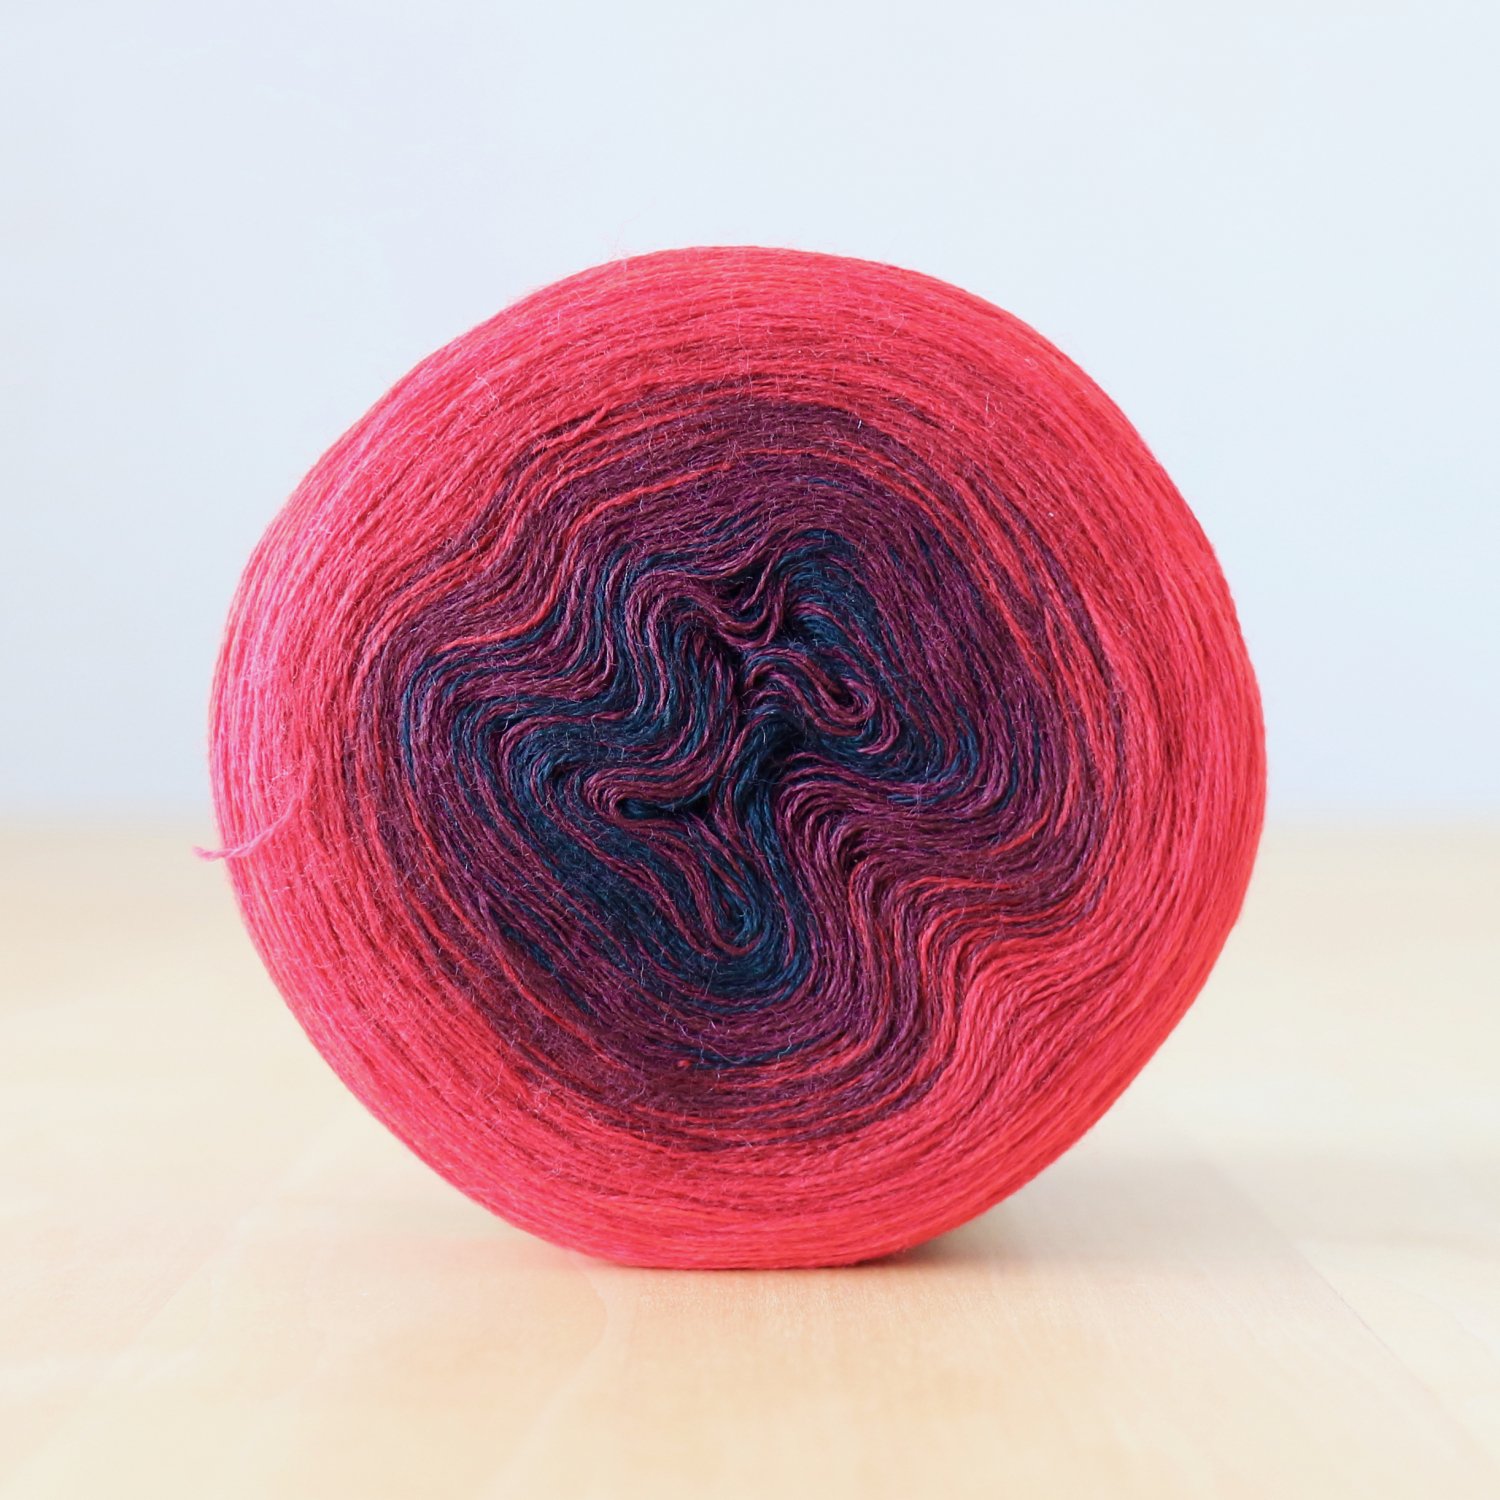 Jolly knits<br>Gradient Yarn Merino 3PLY1000m<br>X-MAS